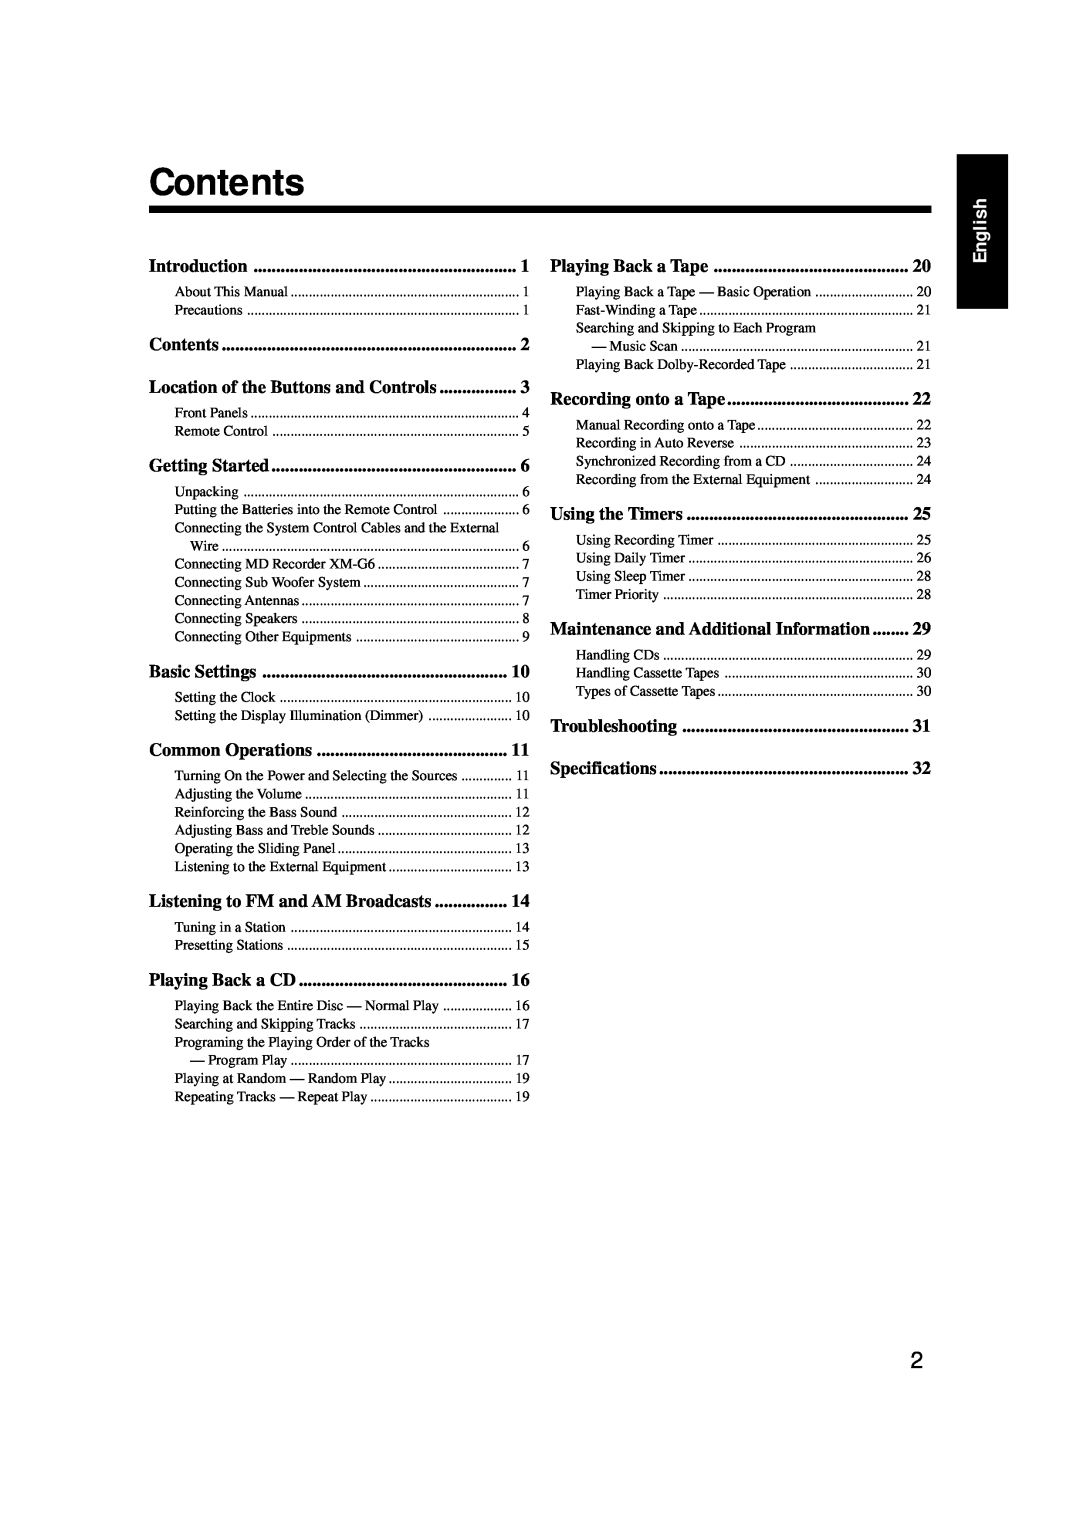 JVC FS-G6, LVT0375-001A, XT-UXG6 manual Contents, English 